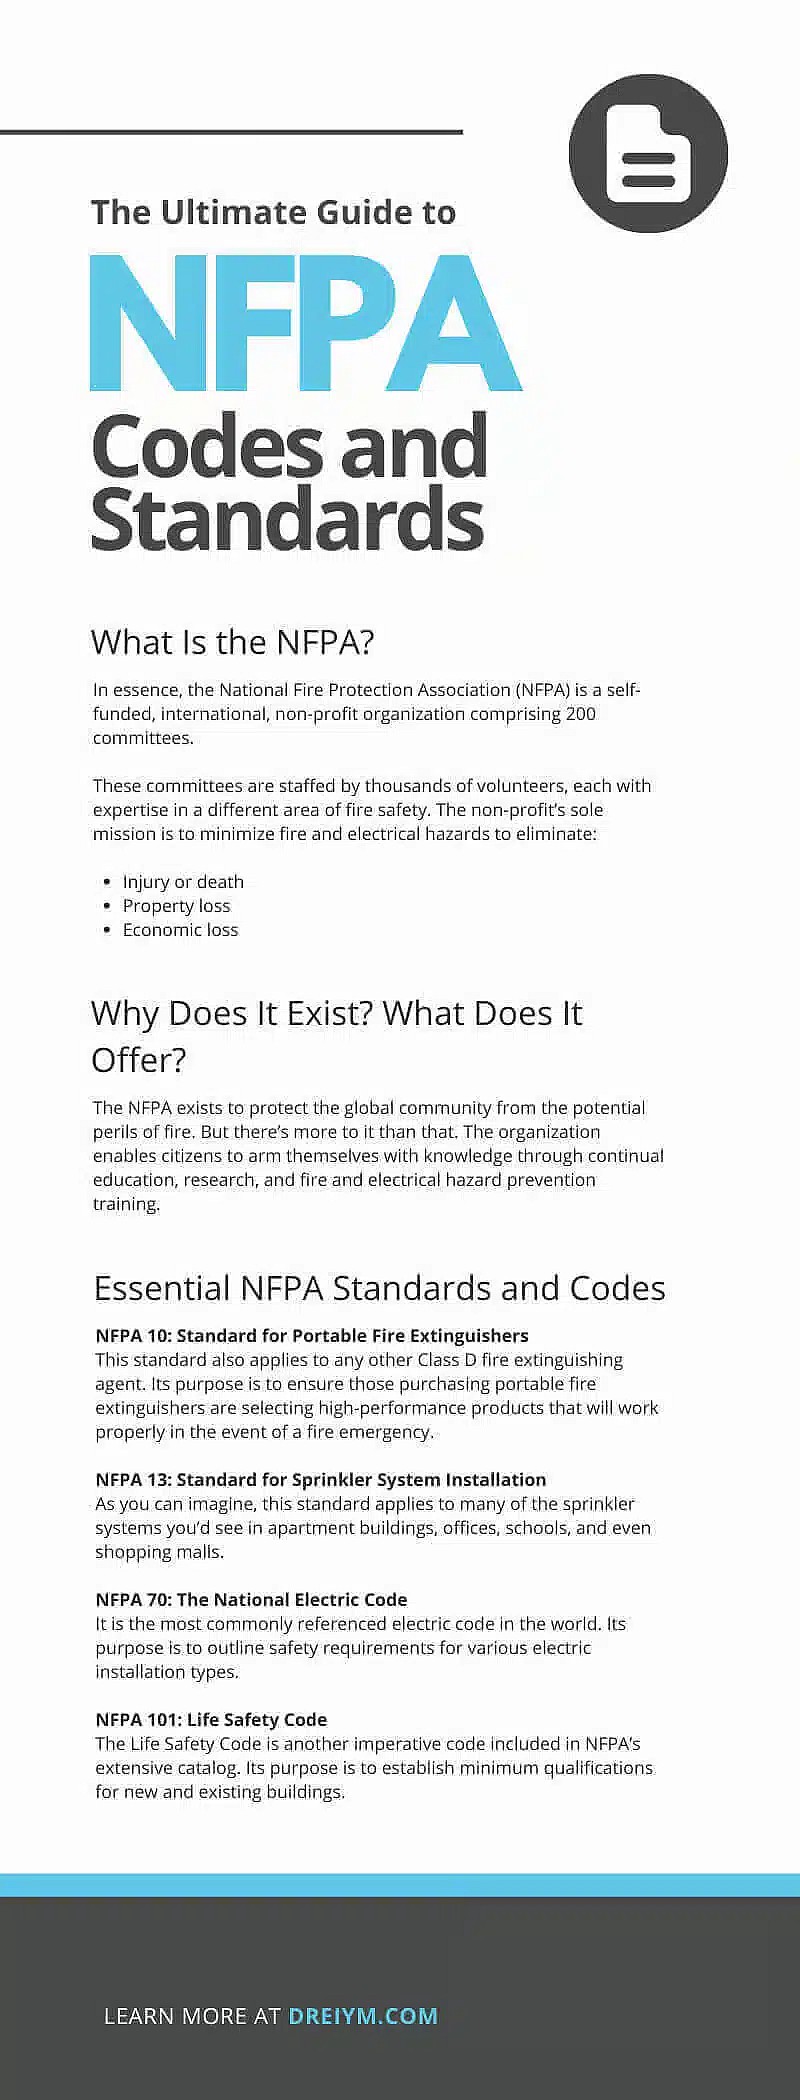 الدليل النهائي لكودات ومعايير NFPA